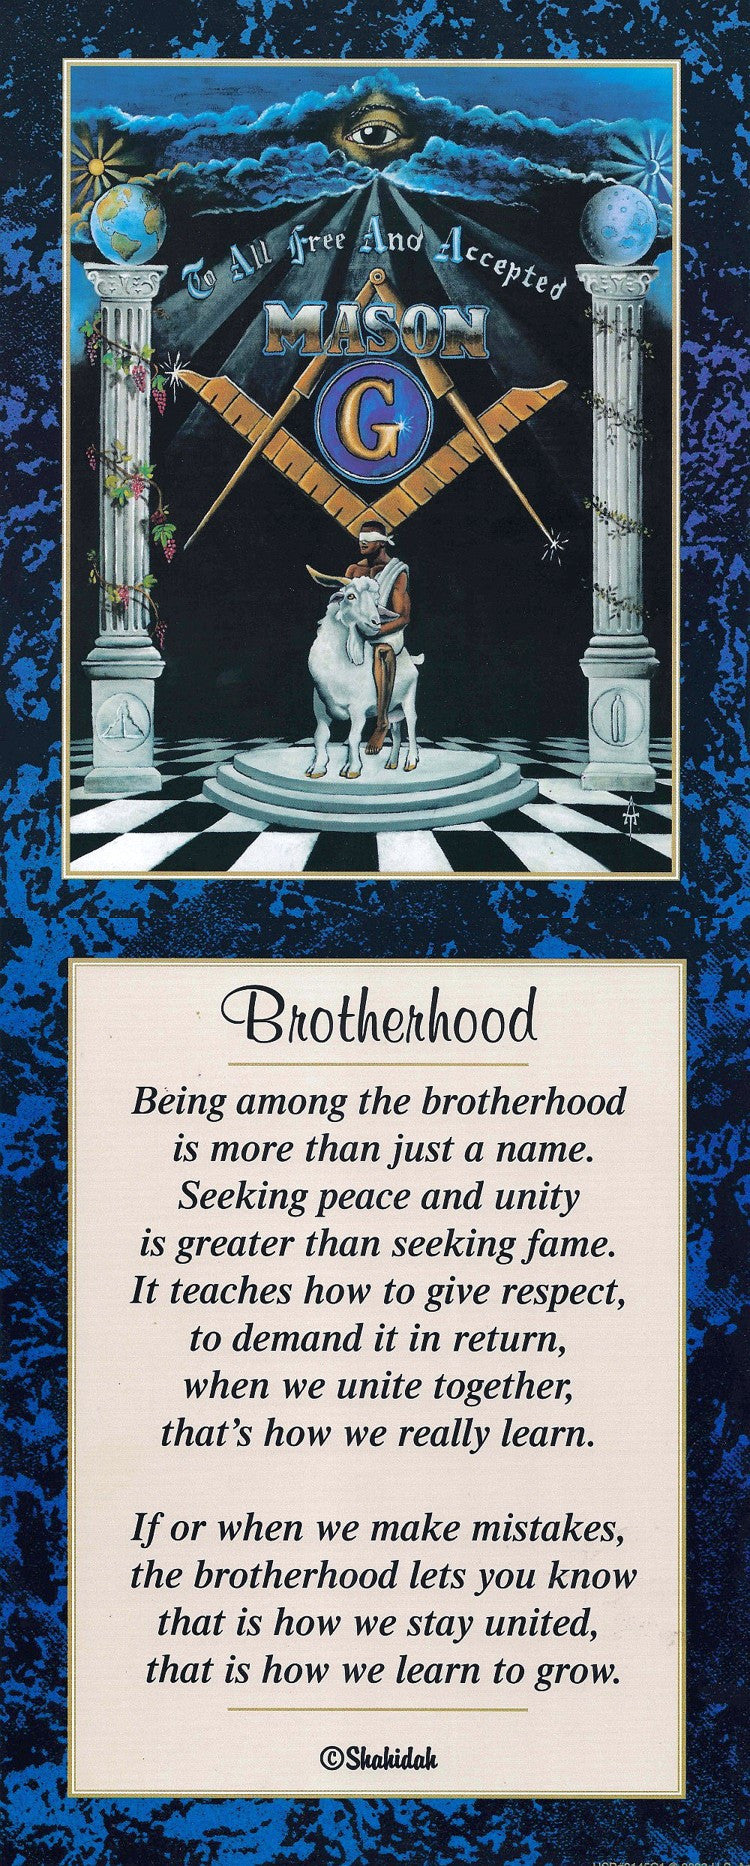 Brotherhood by Tracy Andrews and Shahidah (Freemasonry)